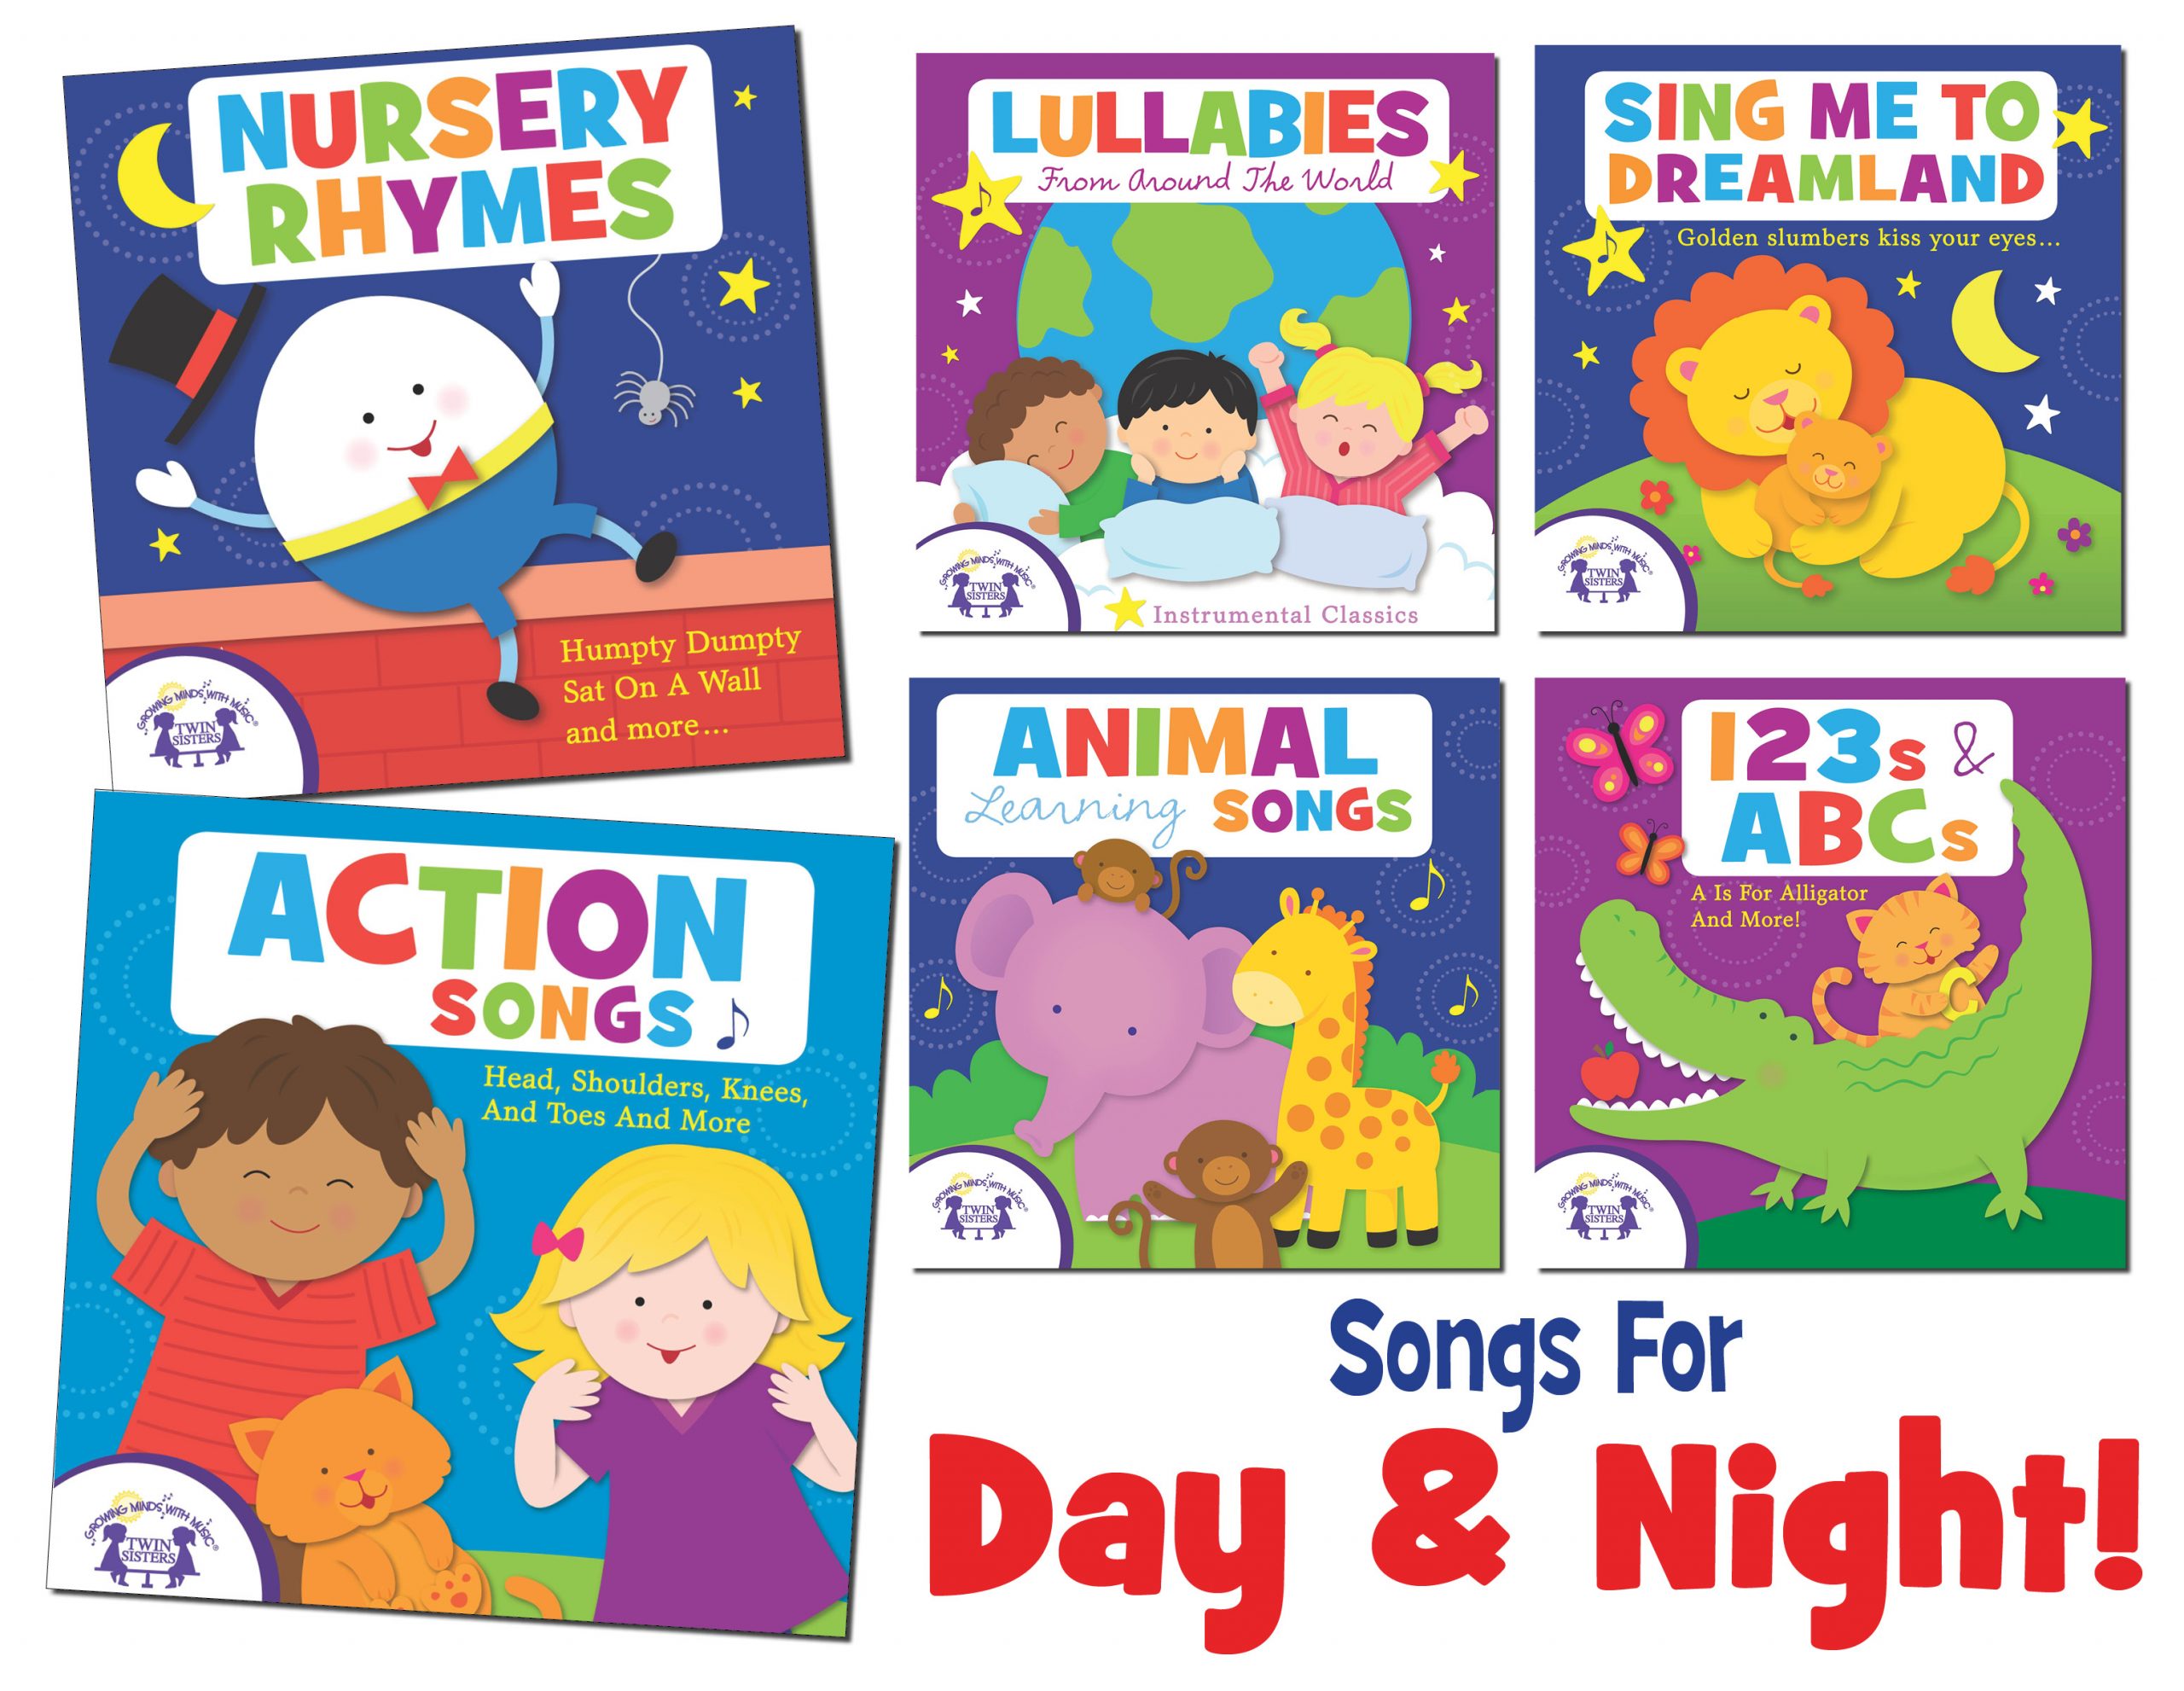 Simon Says Happy Birthday Children's Song LP Sing-A-Long Nursery Rhymes